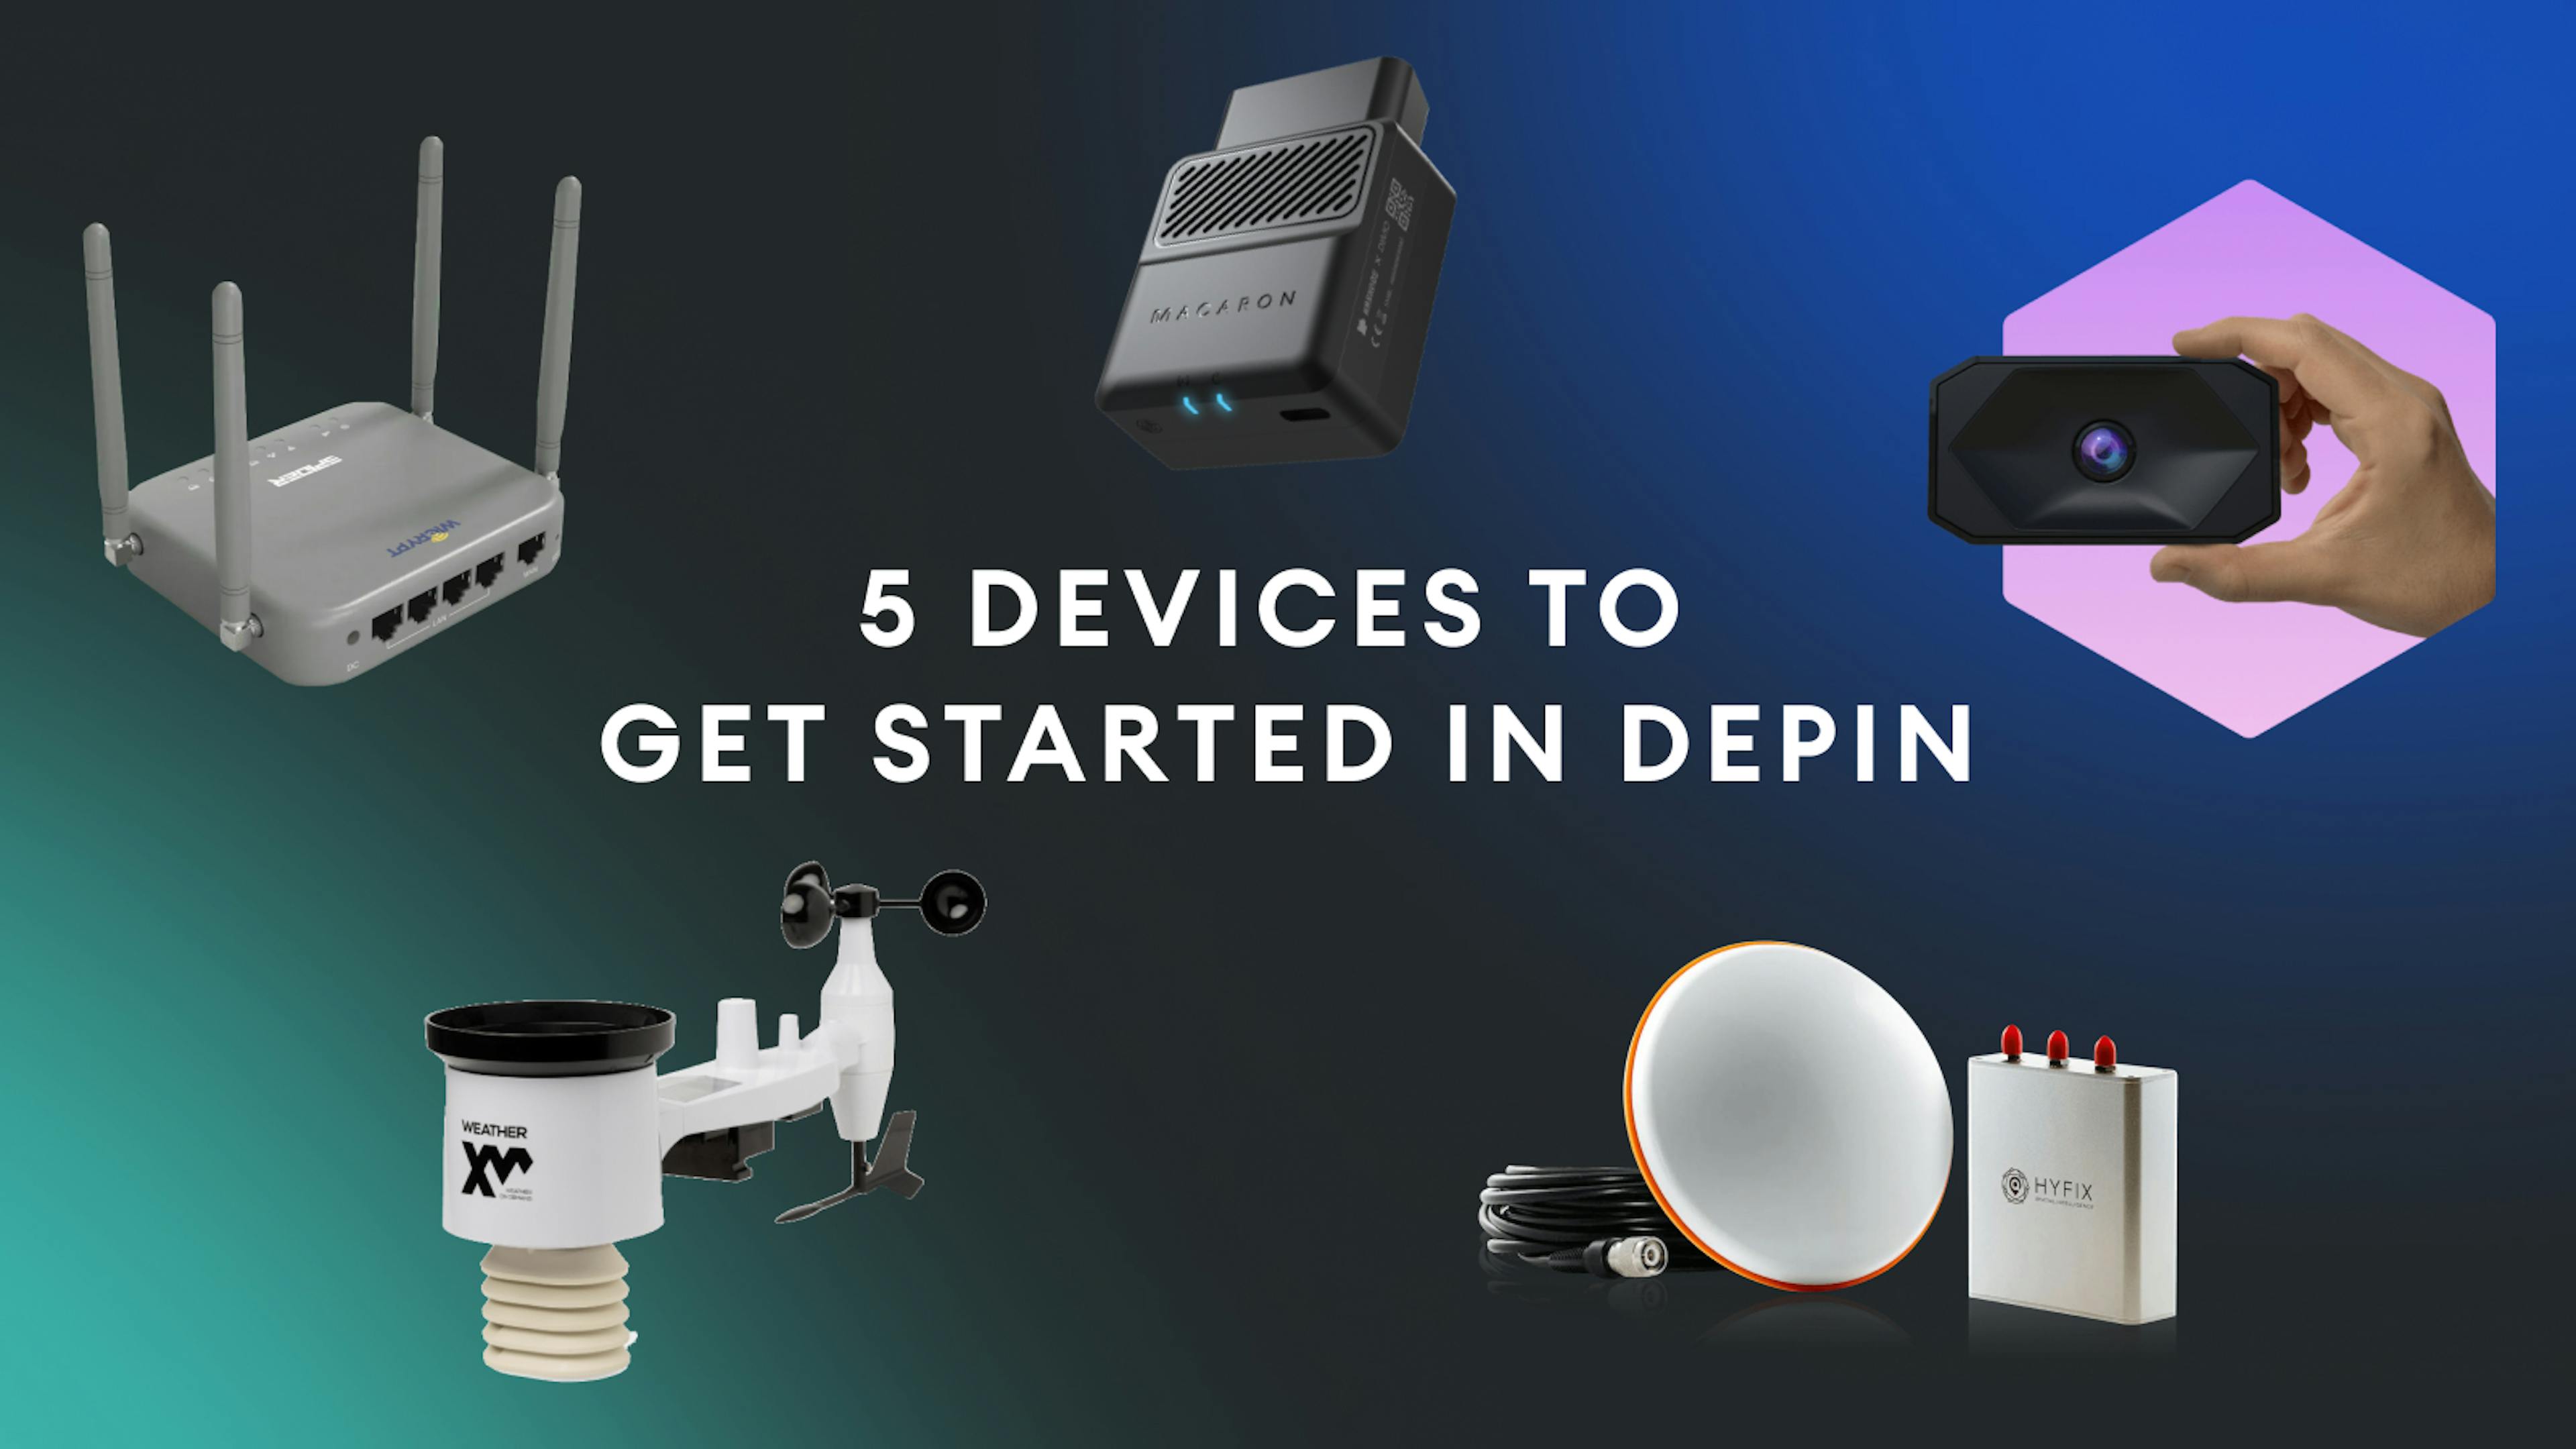 featured image - 开始使用 DePIN 的 5 种设备